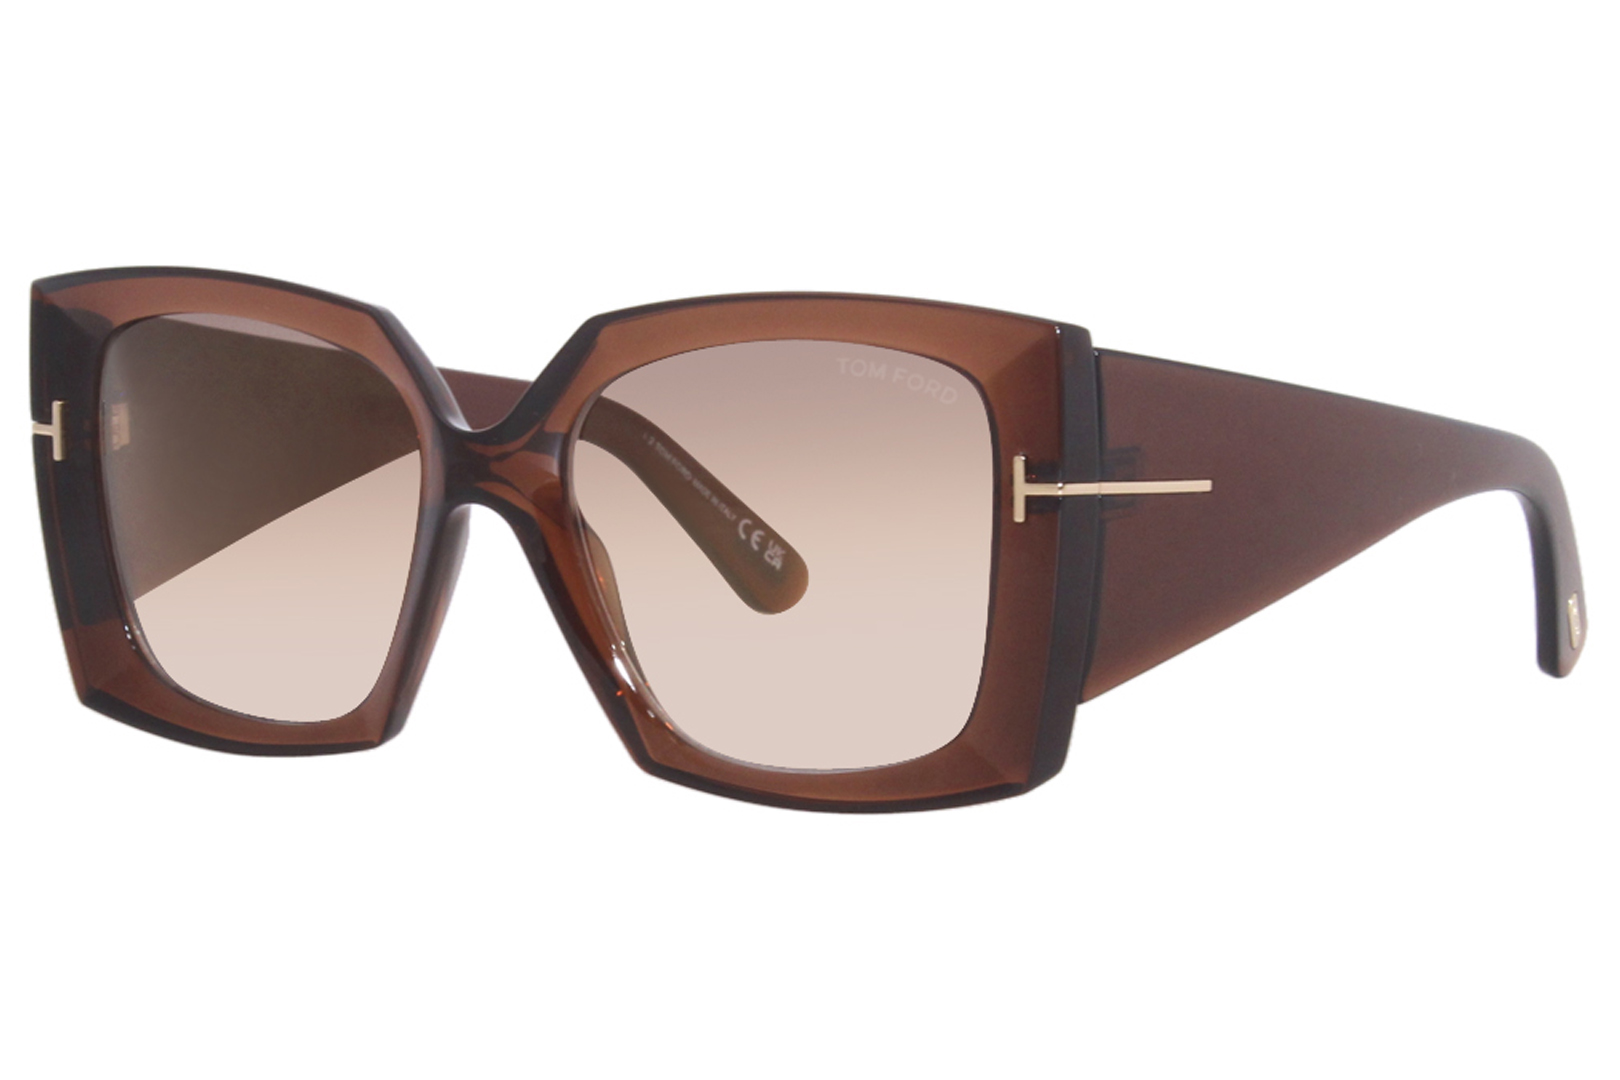 https://www.eyespecs.com/gallery-option/554277924/1/tom-ford-jacquetta-tf921-sunglasses-womens-butterfly-shape-transparent-brown-gold-logo-brown-gradient-48g-1.jpg